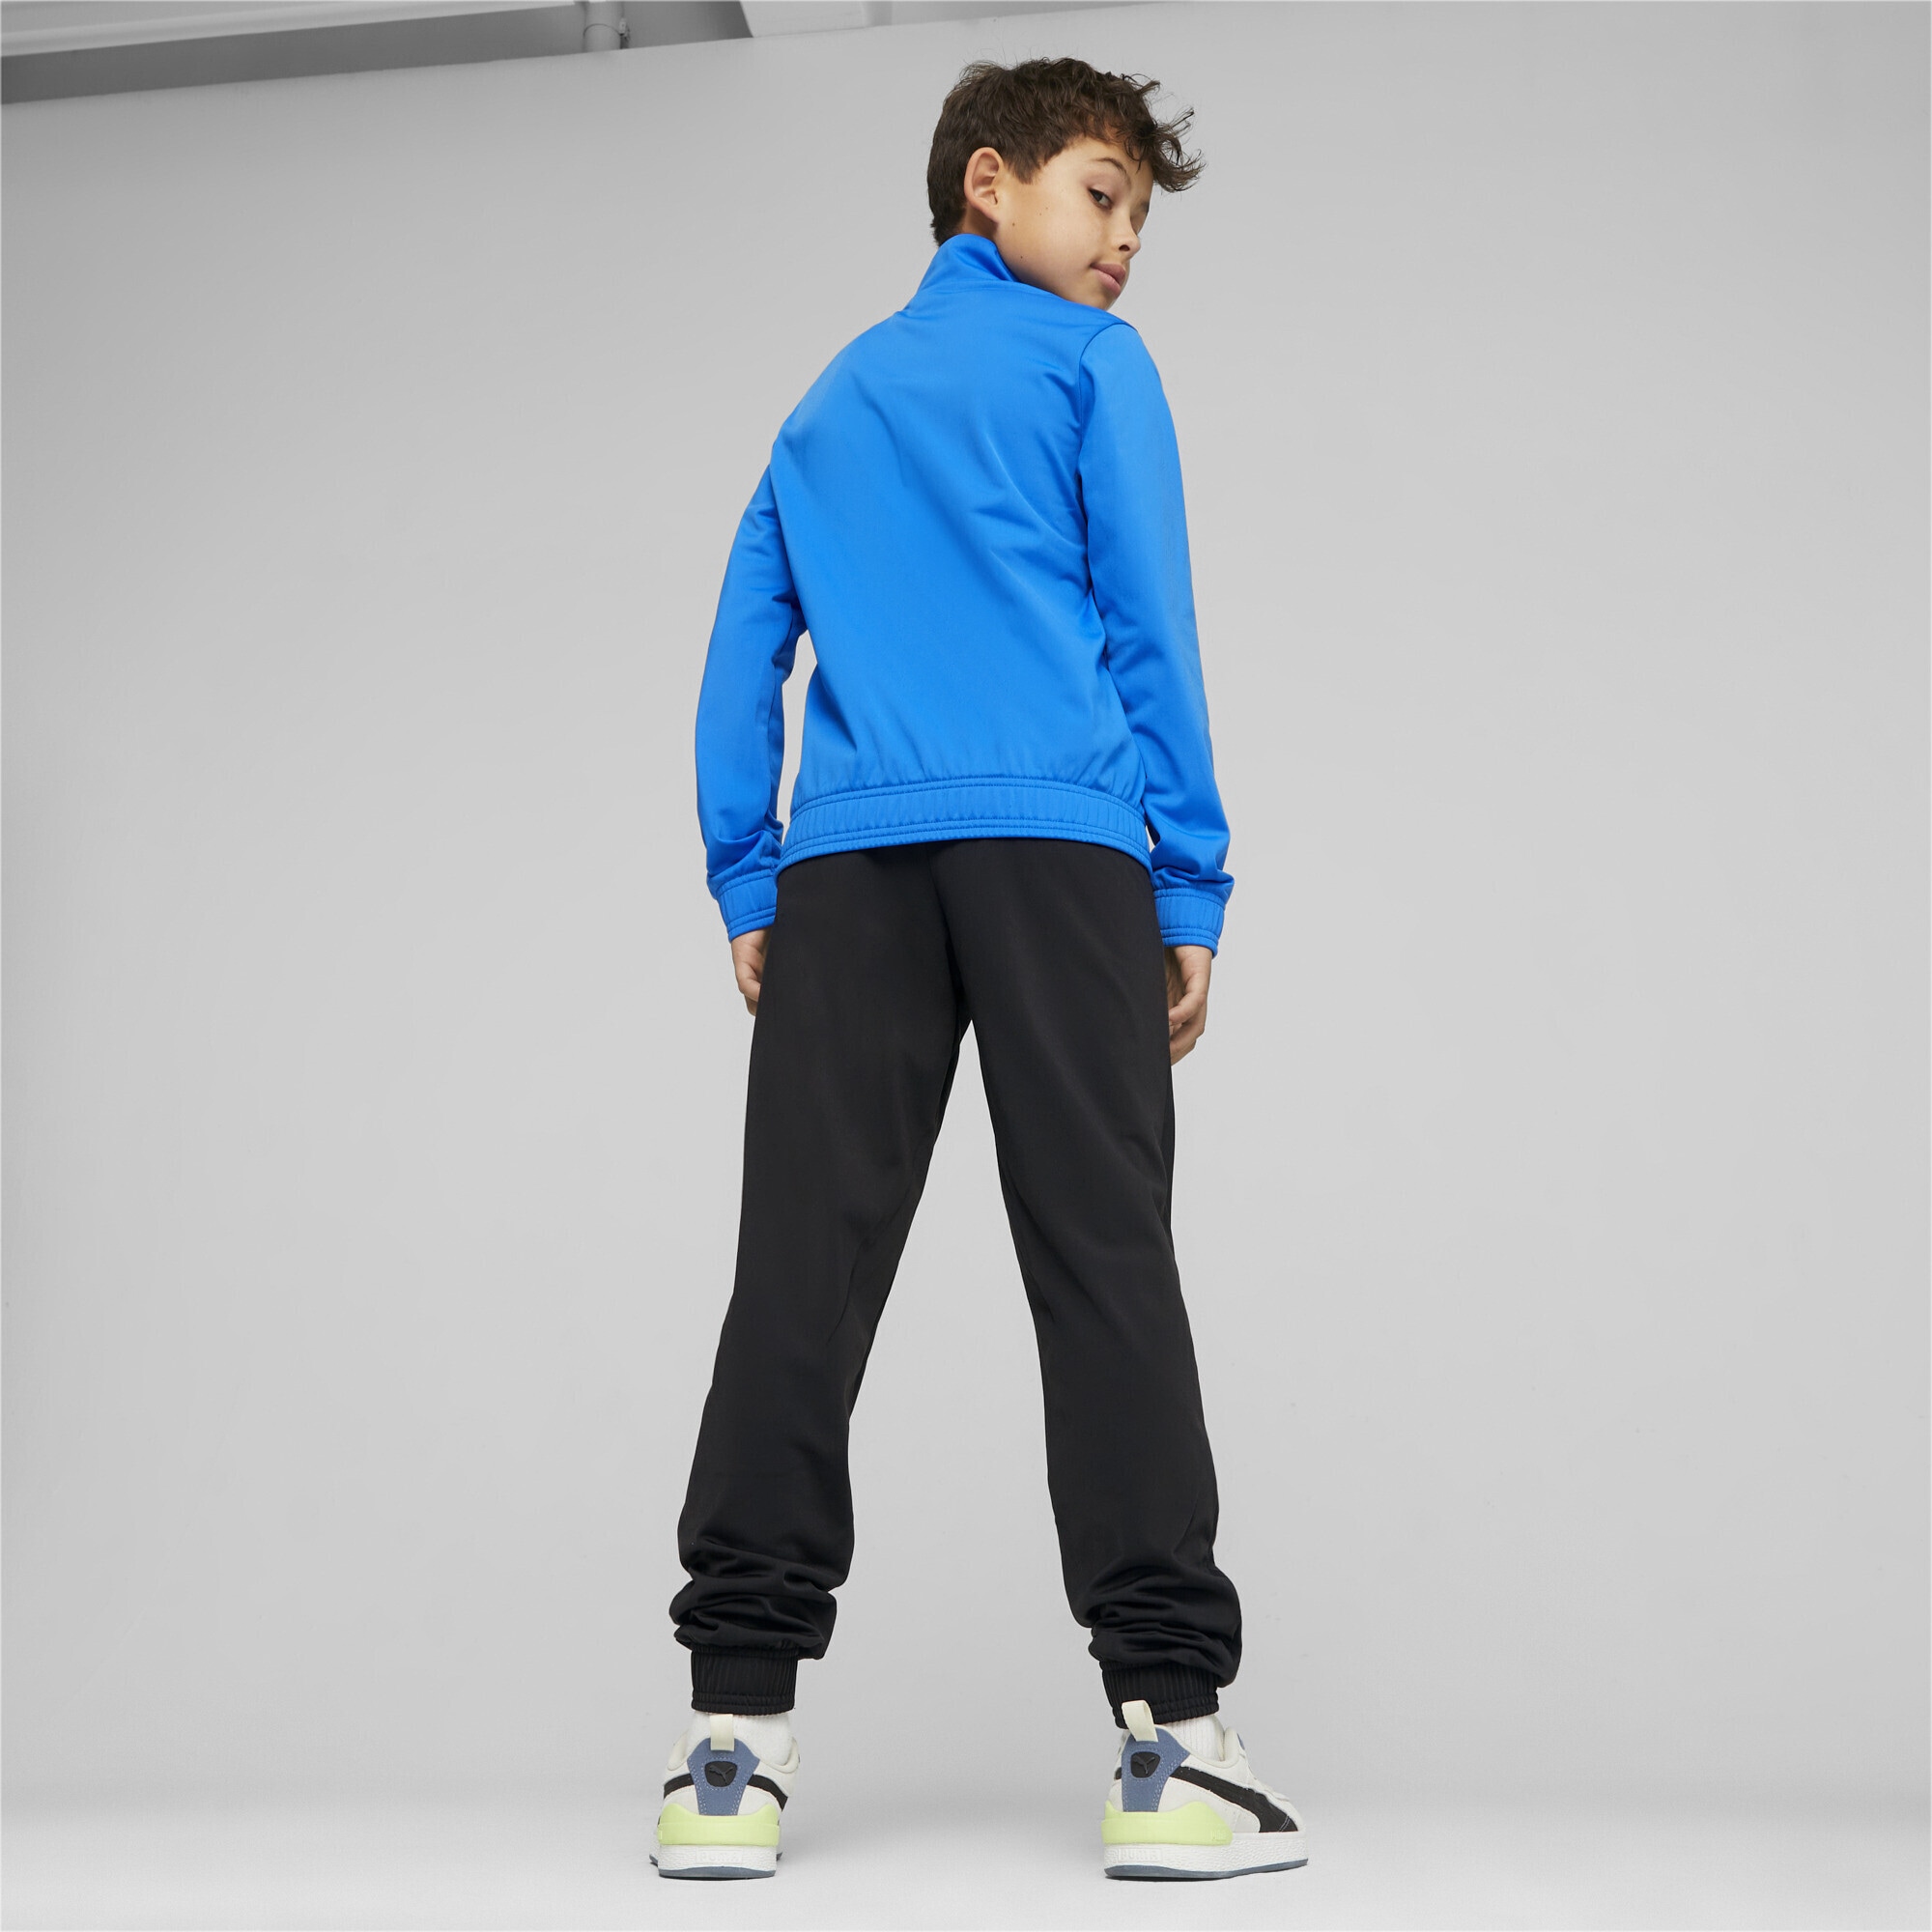 aus »Jugend-Trainingsanzug auf BAUR | Jogginganzug PUMA Raten Polyester«